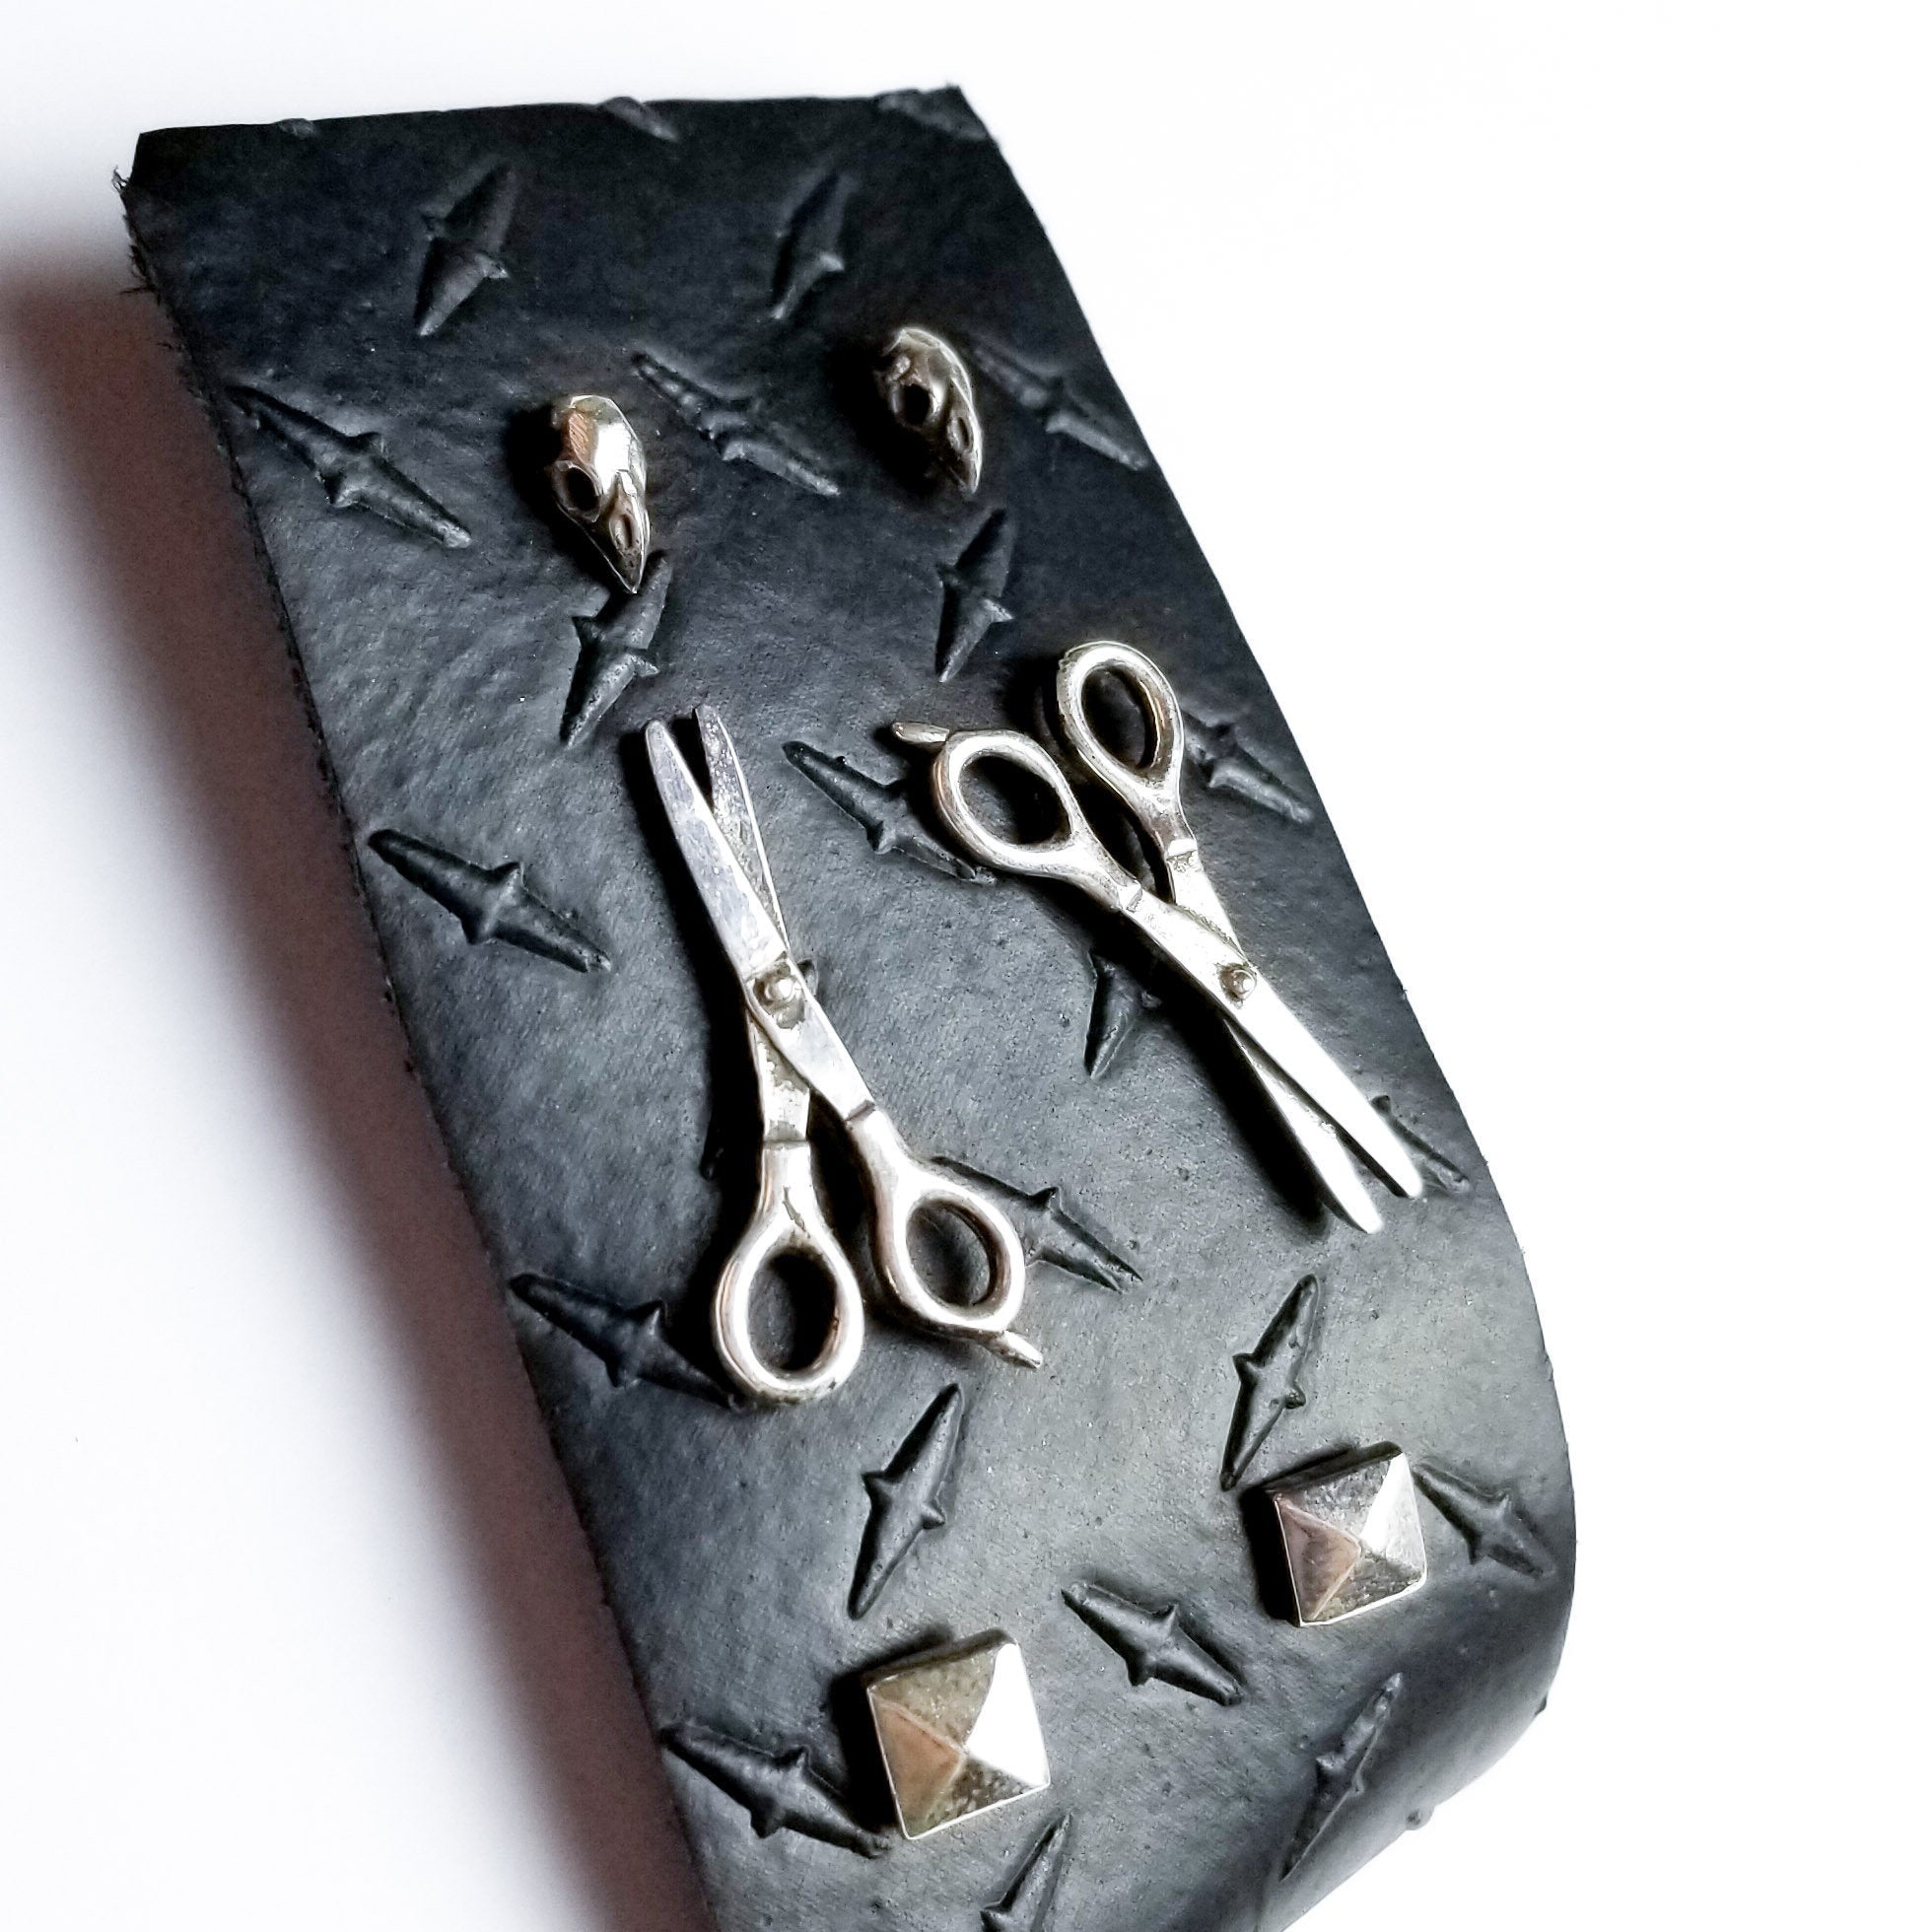 Set of 3 Pairs of Earrings #3 - Bird Skull, Scissors & Pyramid